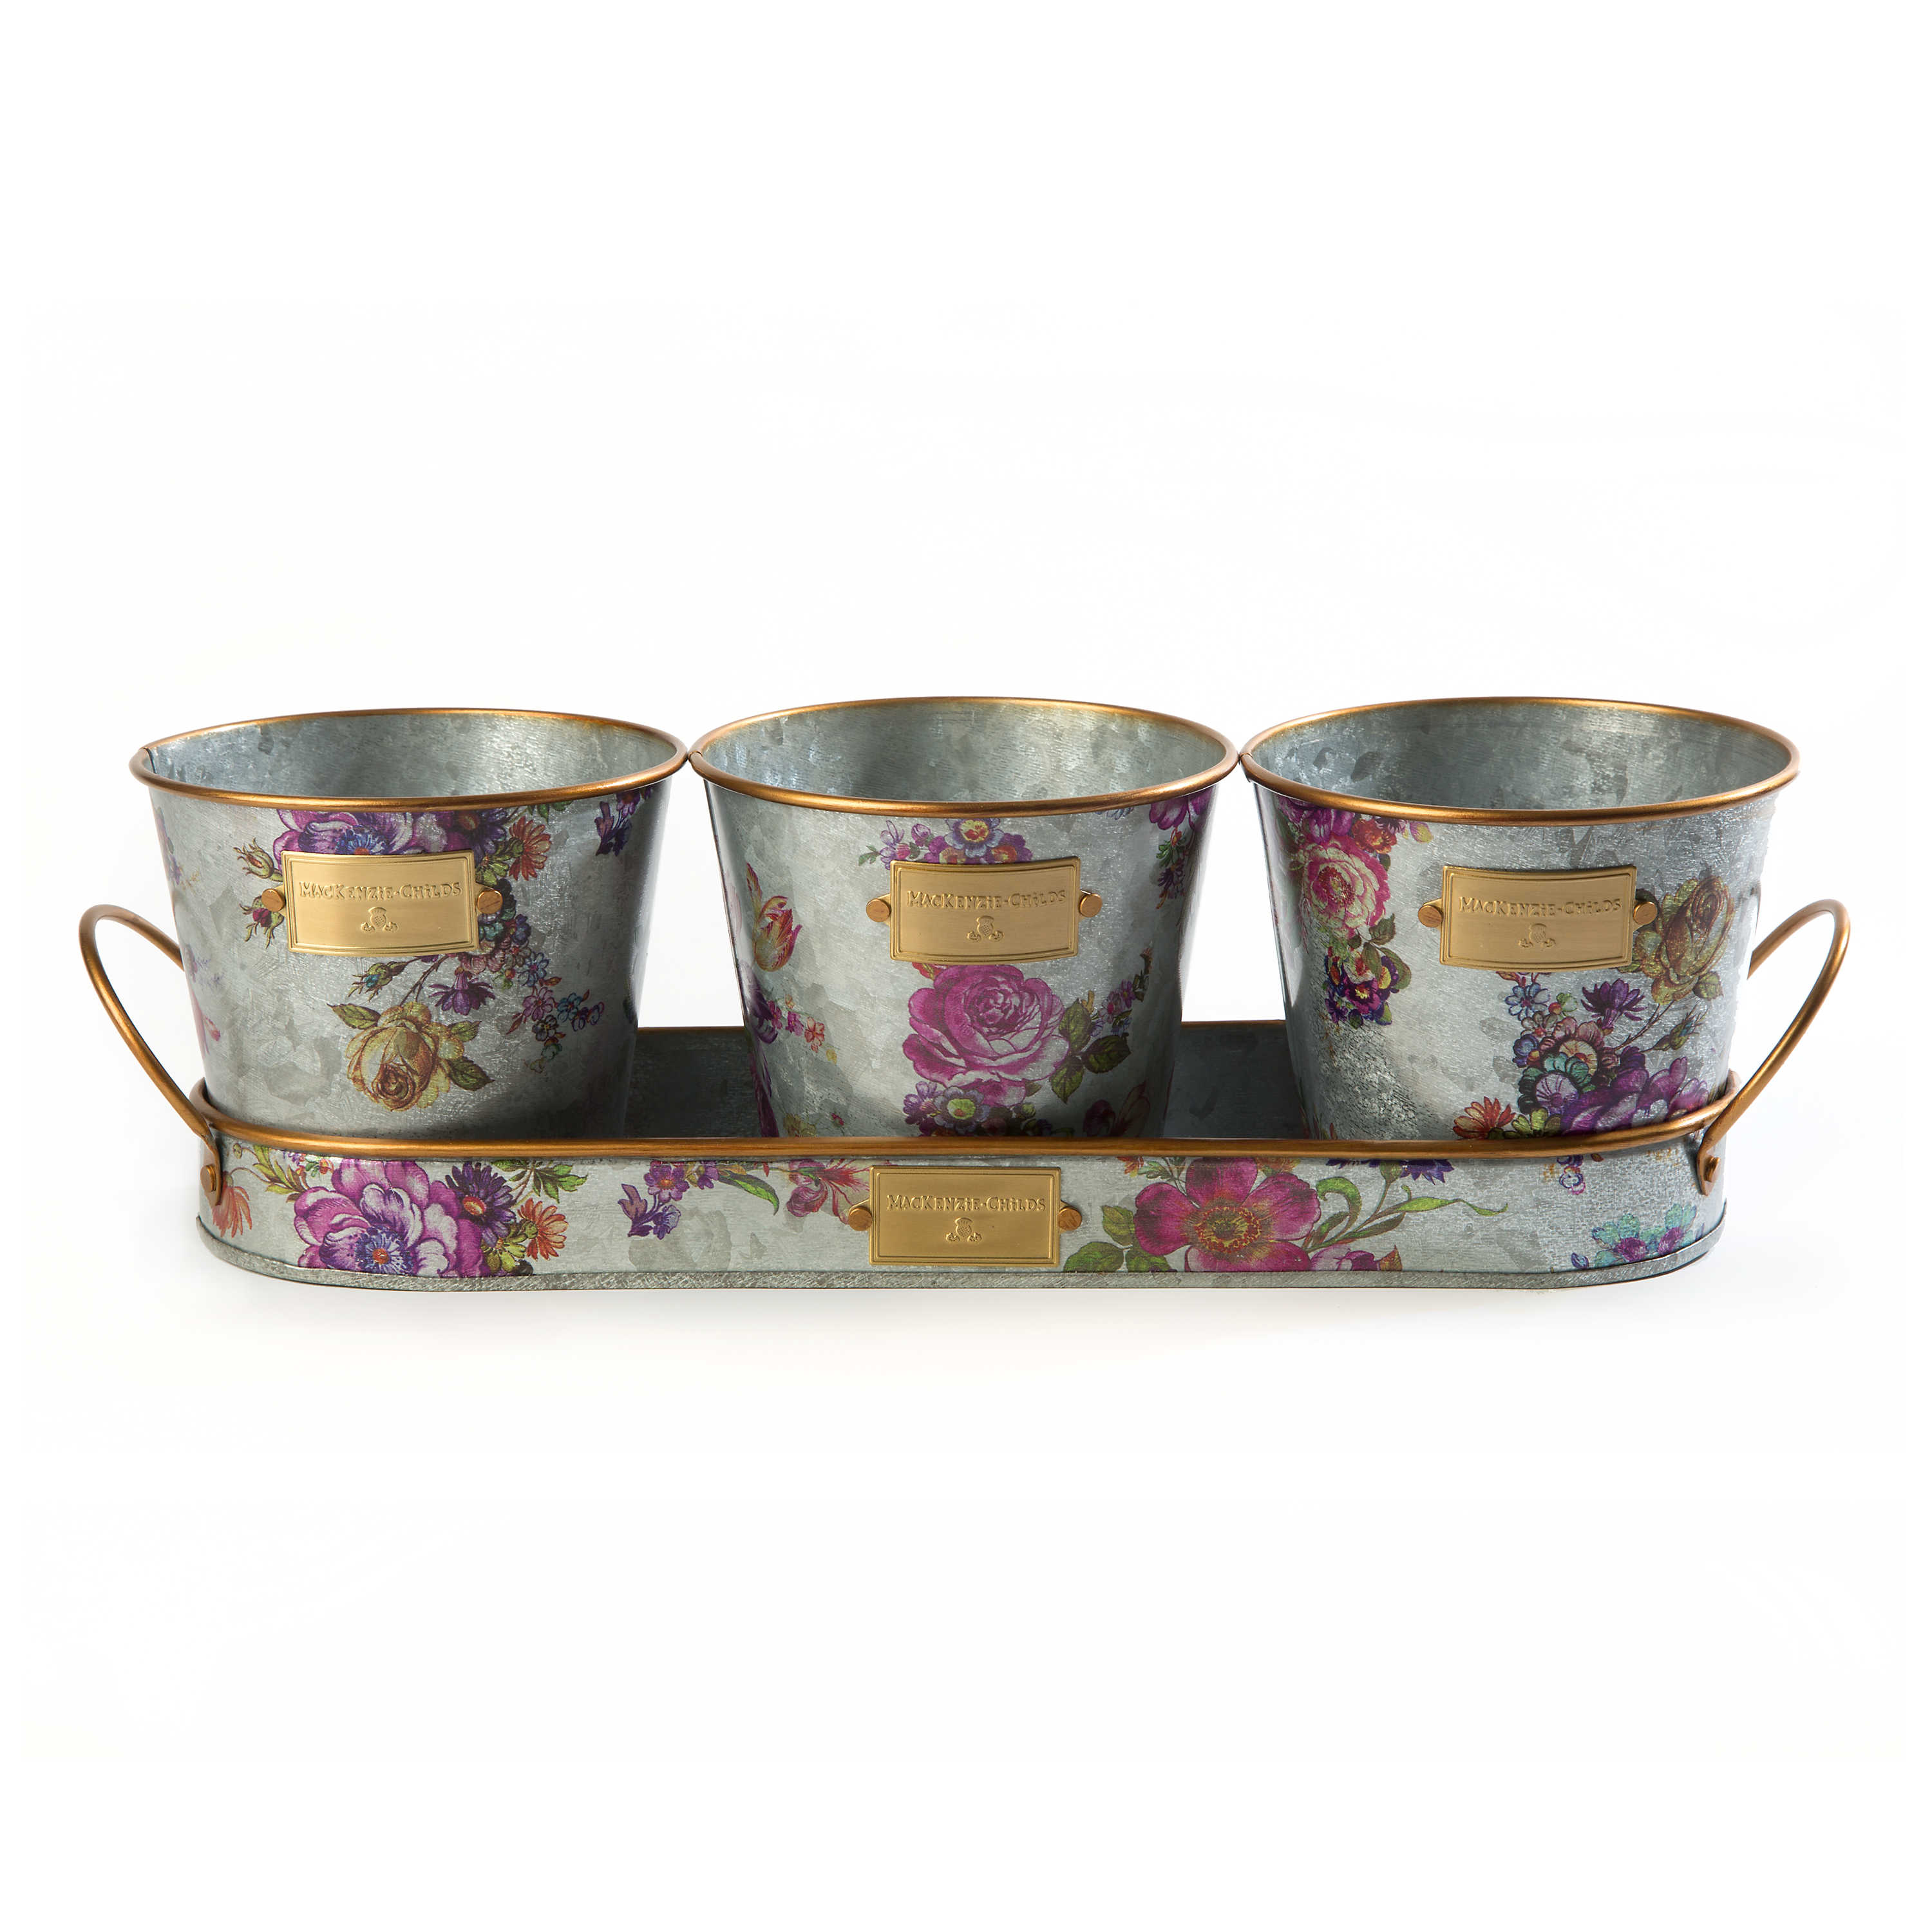 Flower Market Galvanized Herb Pots with Tray, Set of 3 mackenzie-childs Panama 0